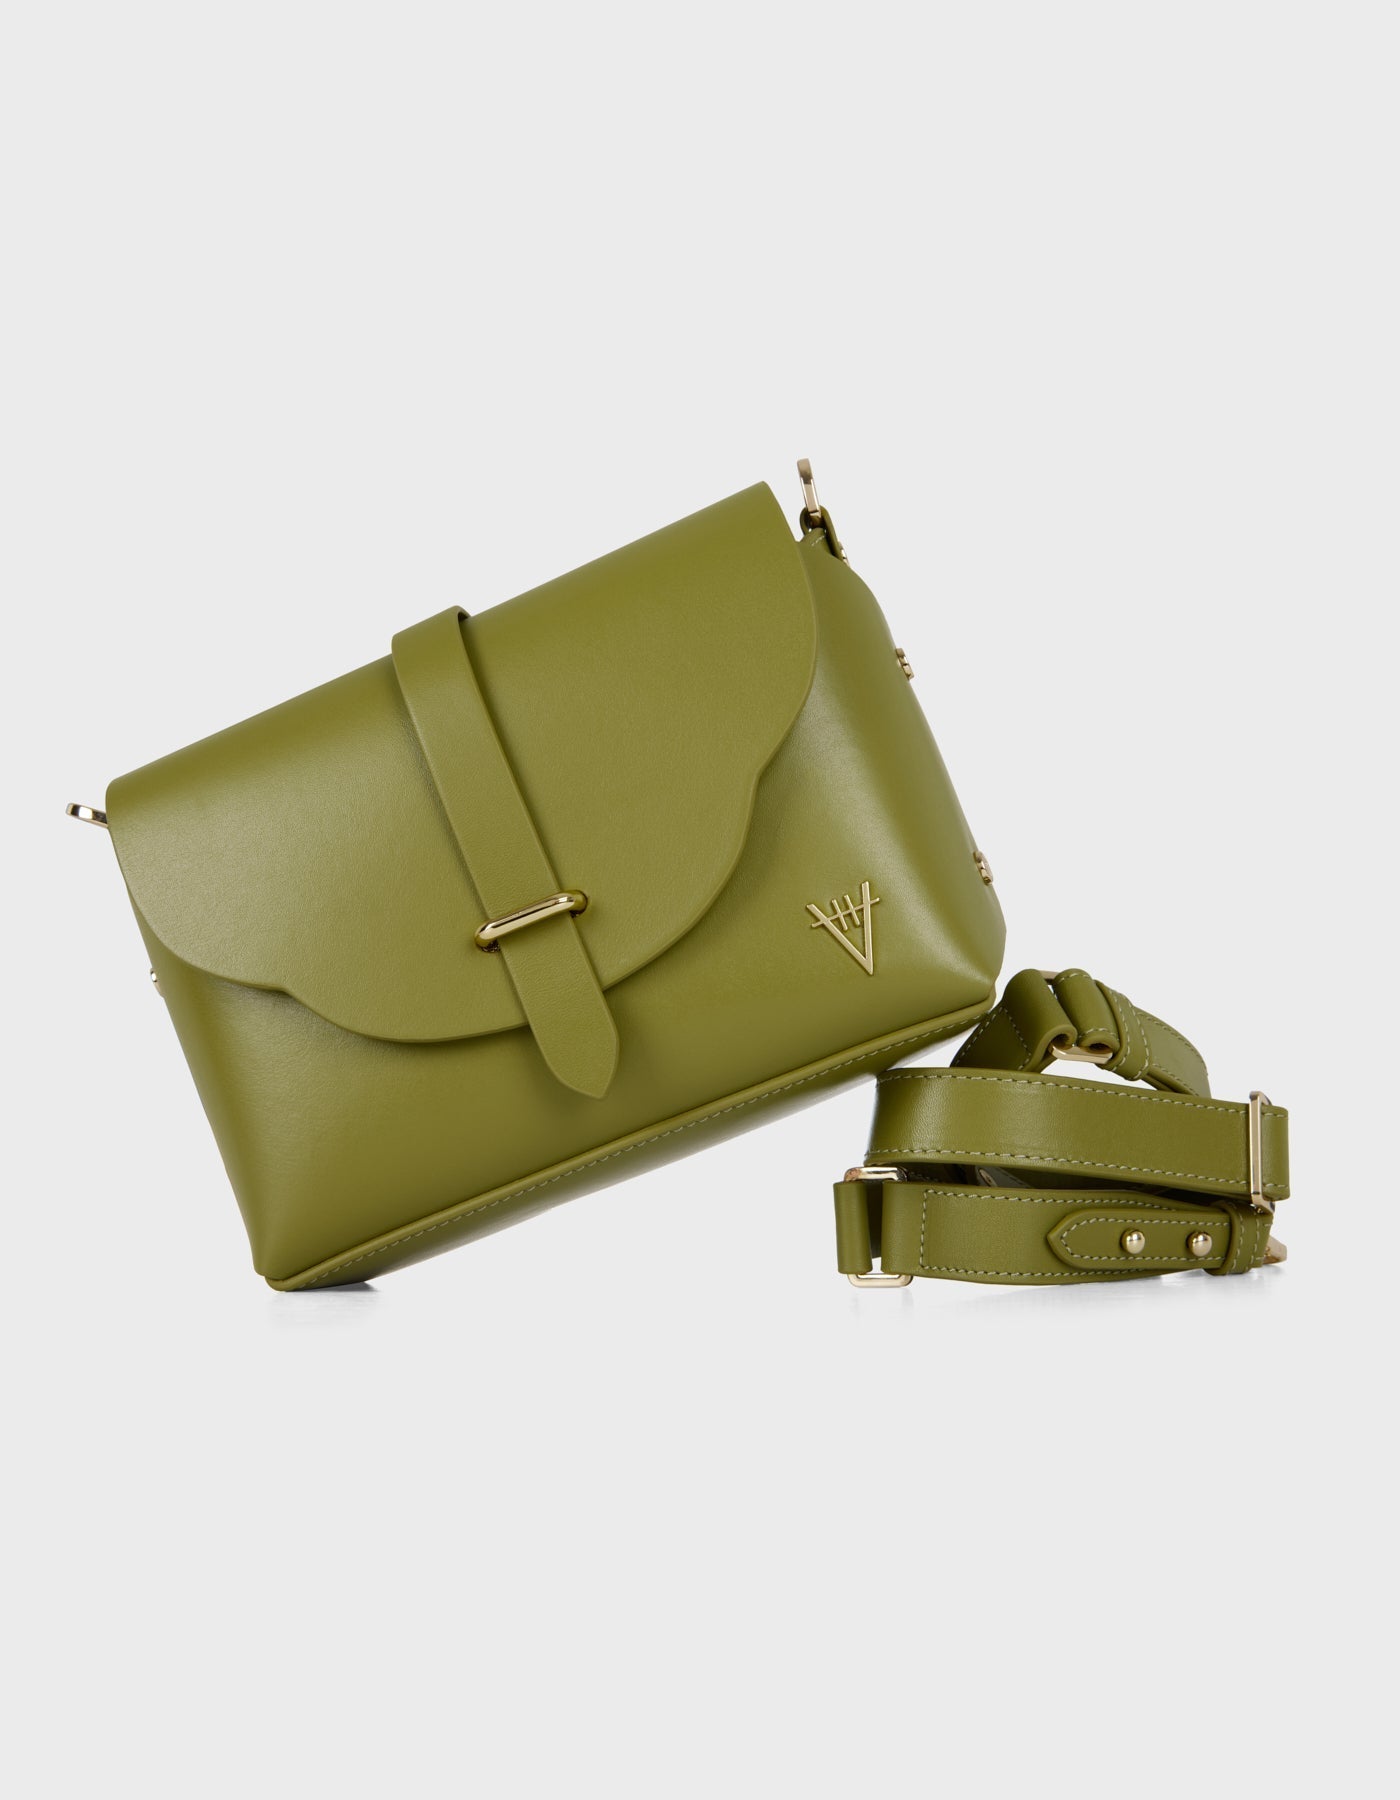 Hiva Atelier | Harmonia Shoulder Bag Olive | Beautiful and Versatile